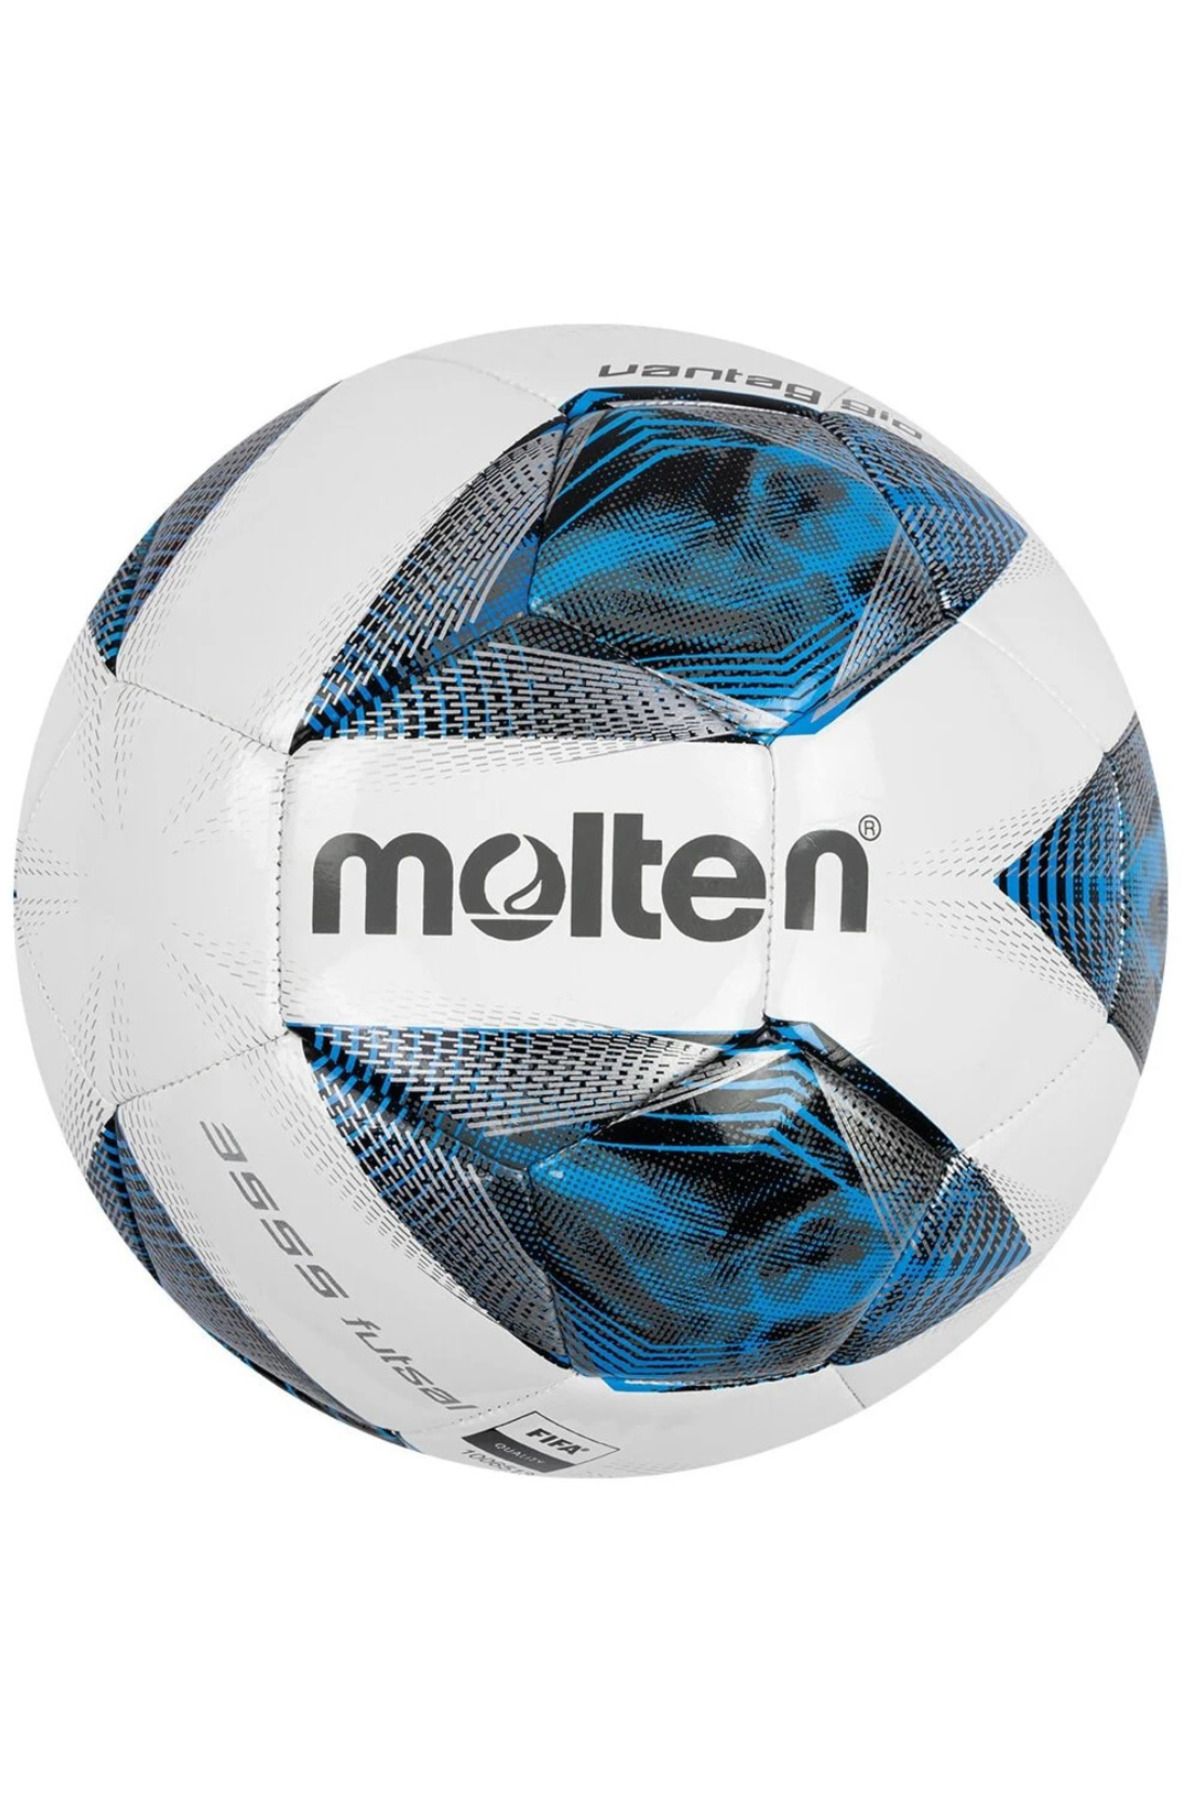 Molten F9A3555 4 No Salon Futbolu (Futsal) Topu